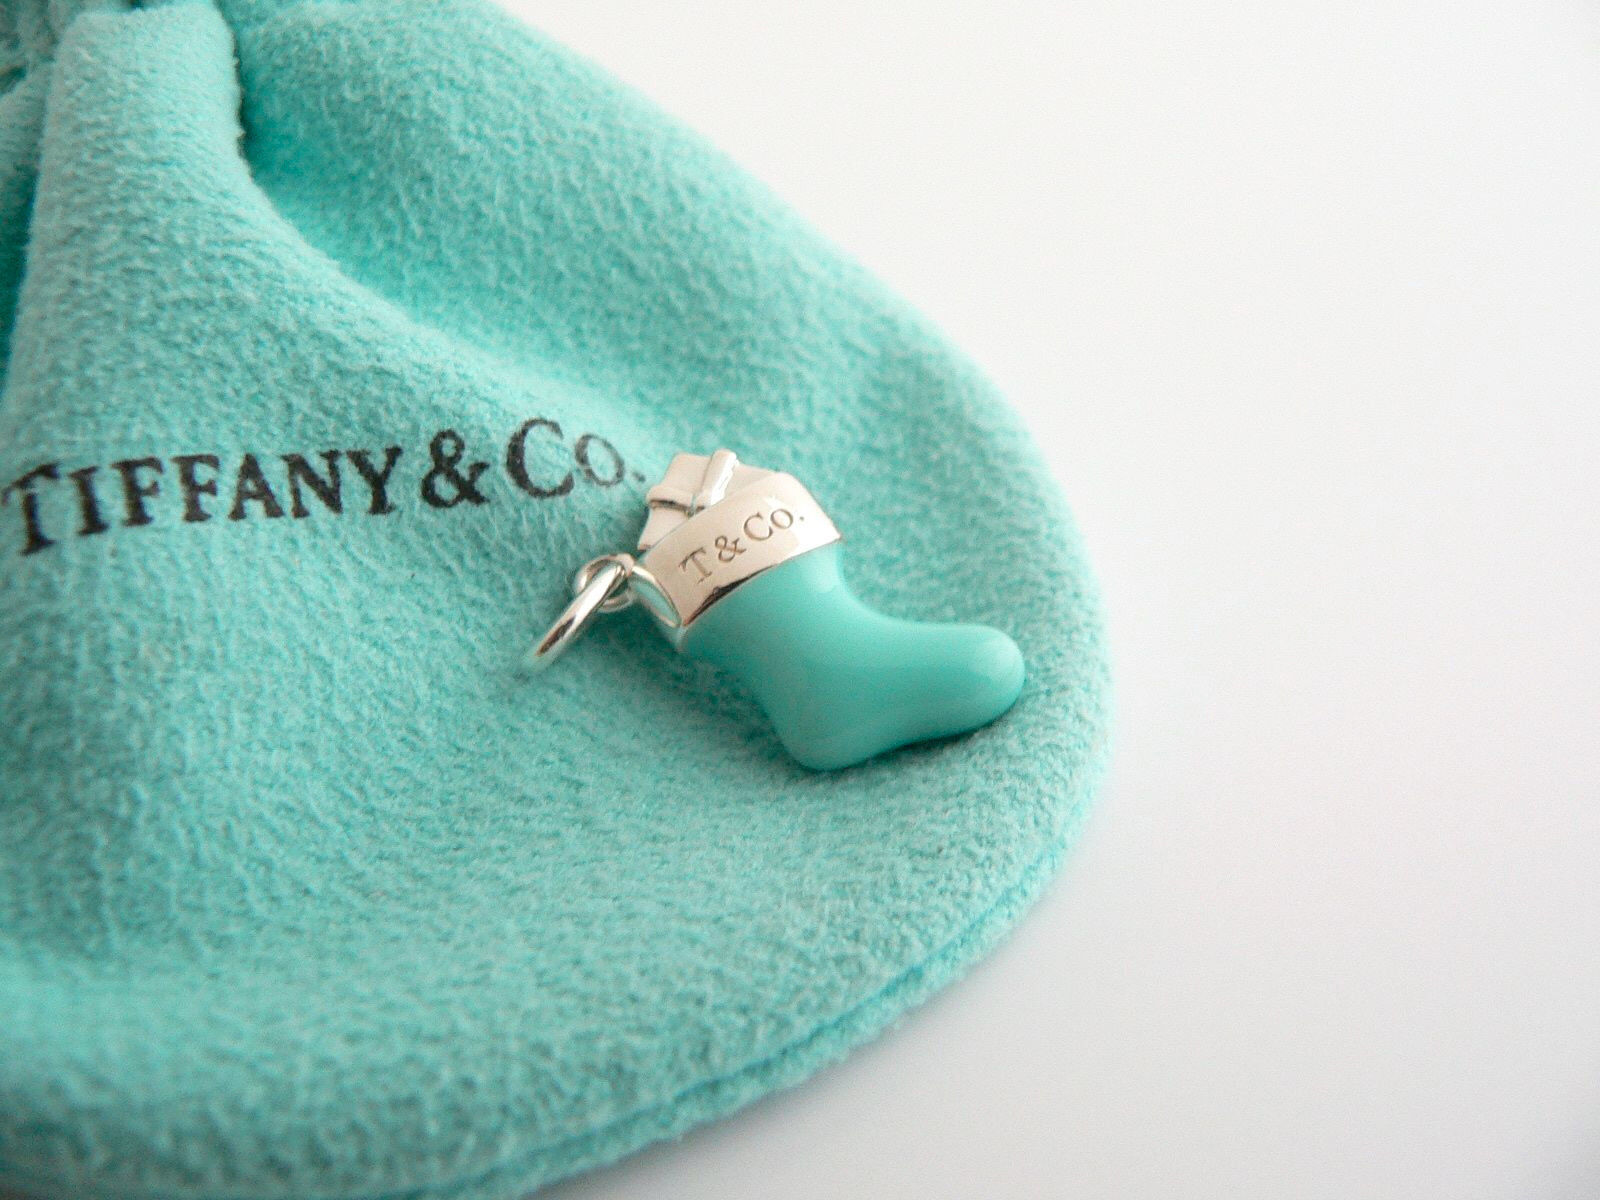 Tiffany & Co Silver Blue Enamel Stocking Sock Charm 4 Necklace Bracelet Gift - $698.00